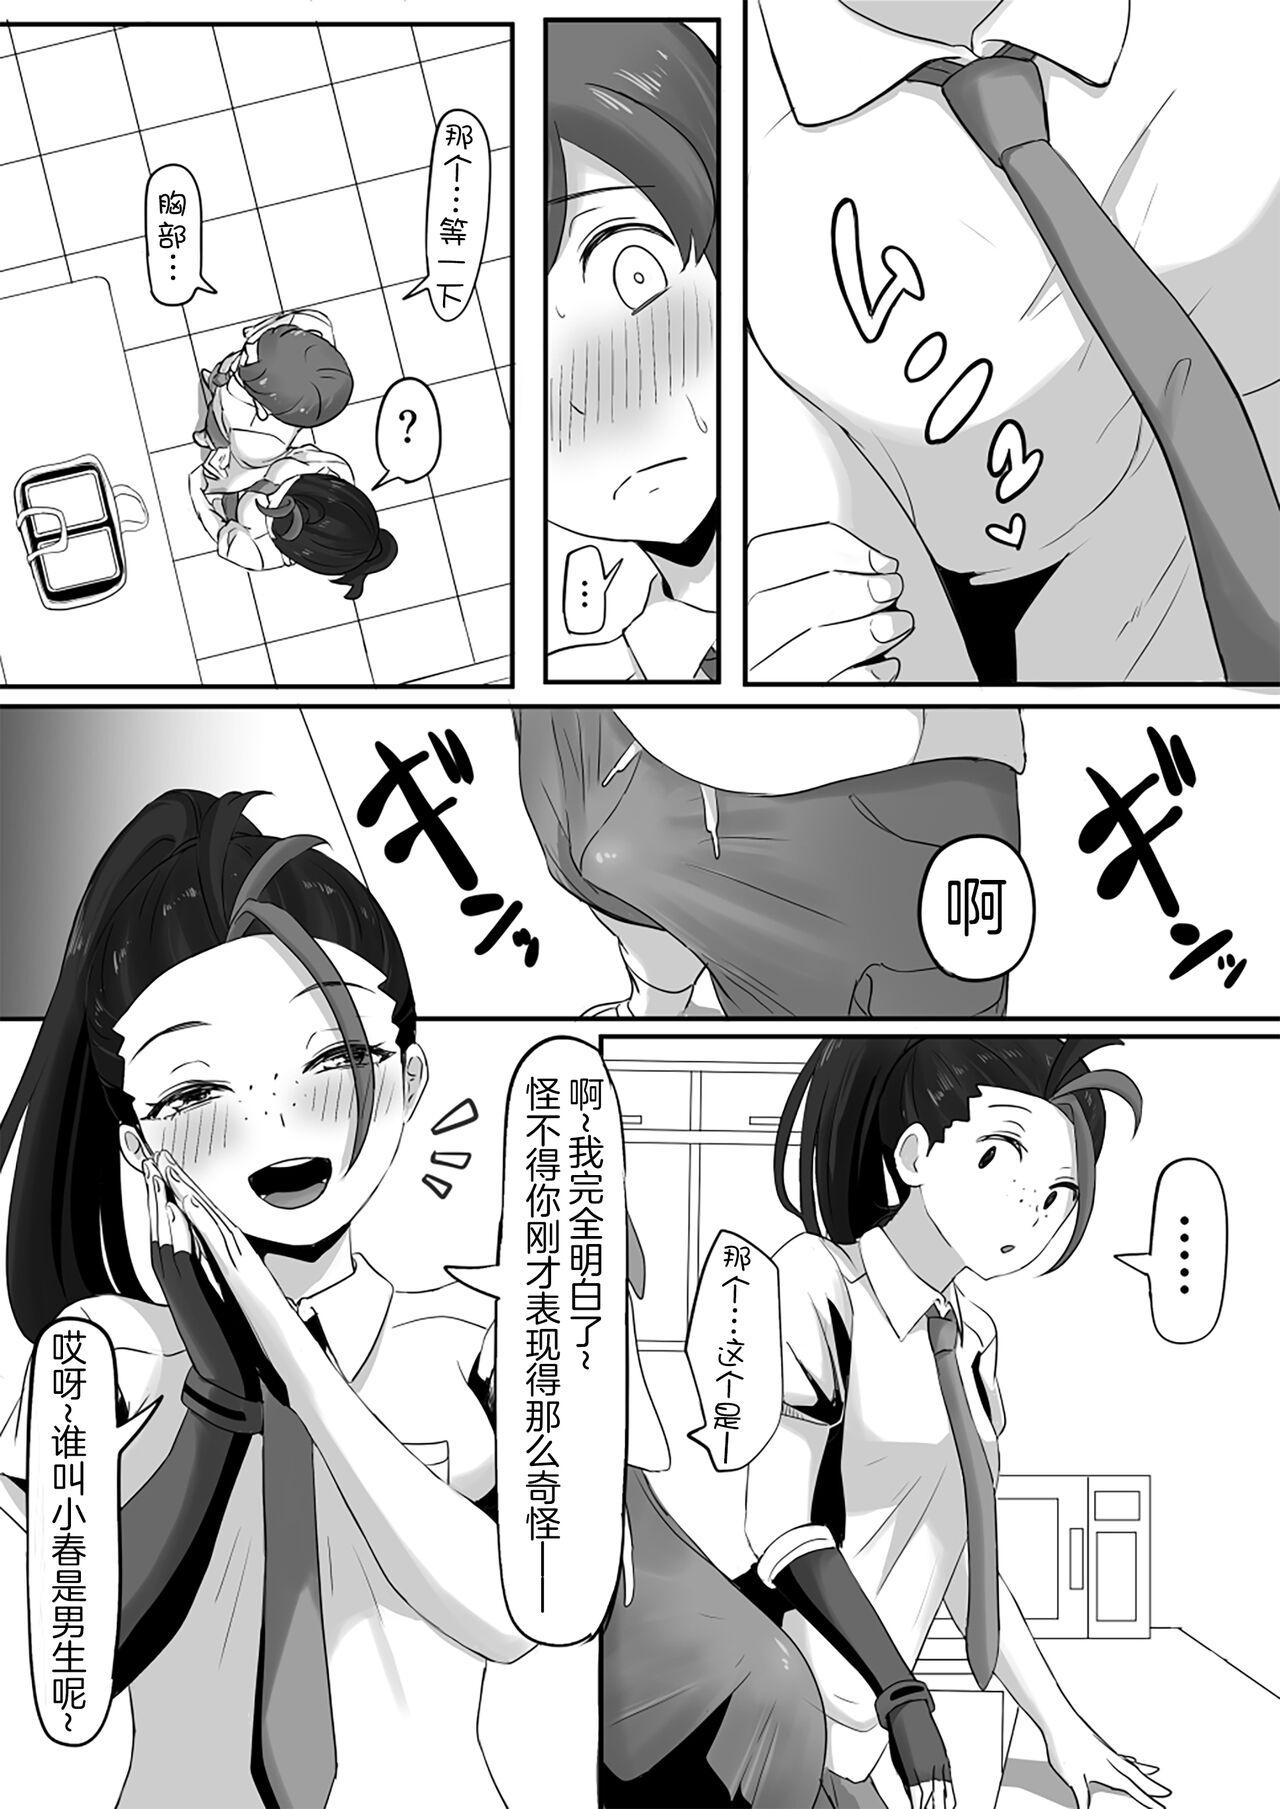 Chunky Nemona's Ero Manga | 成为我独一无二的劲敌可以吗 - Pokemon | pocket monsters Cuzinho - Page 8